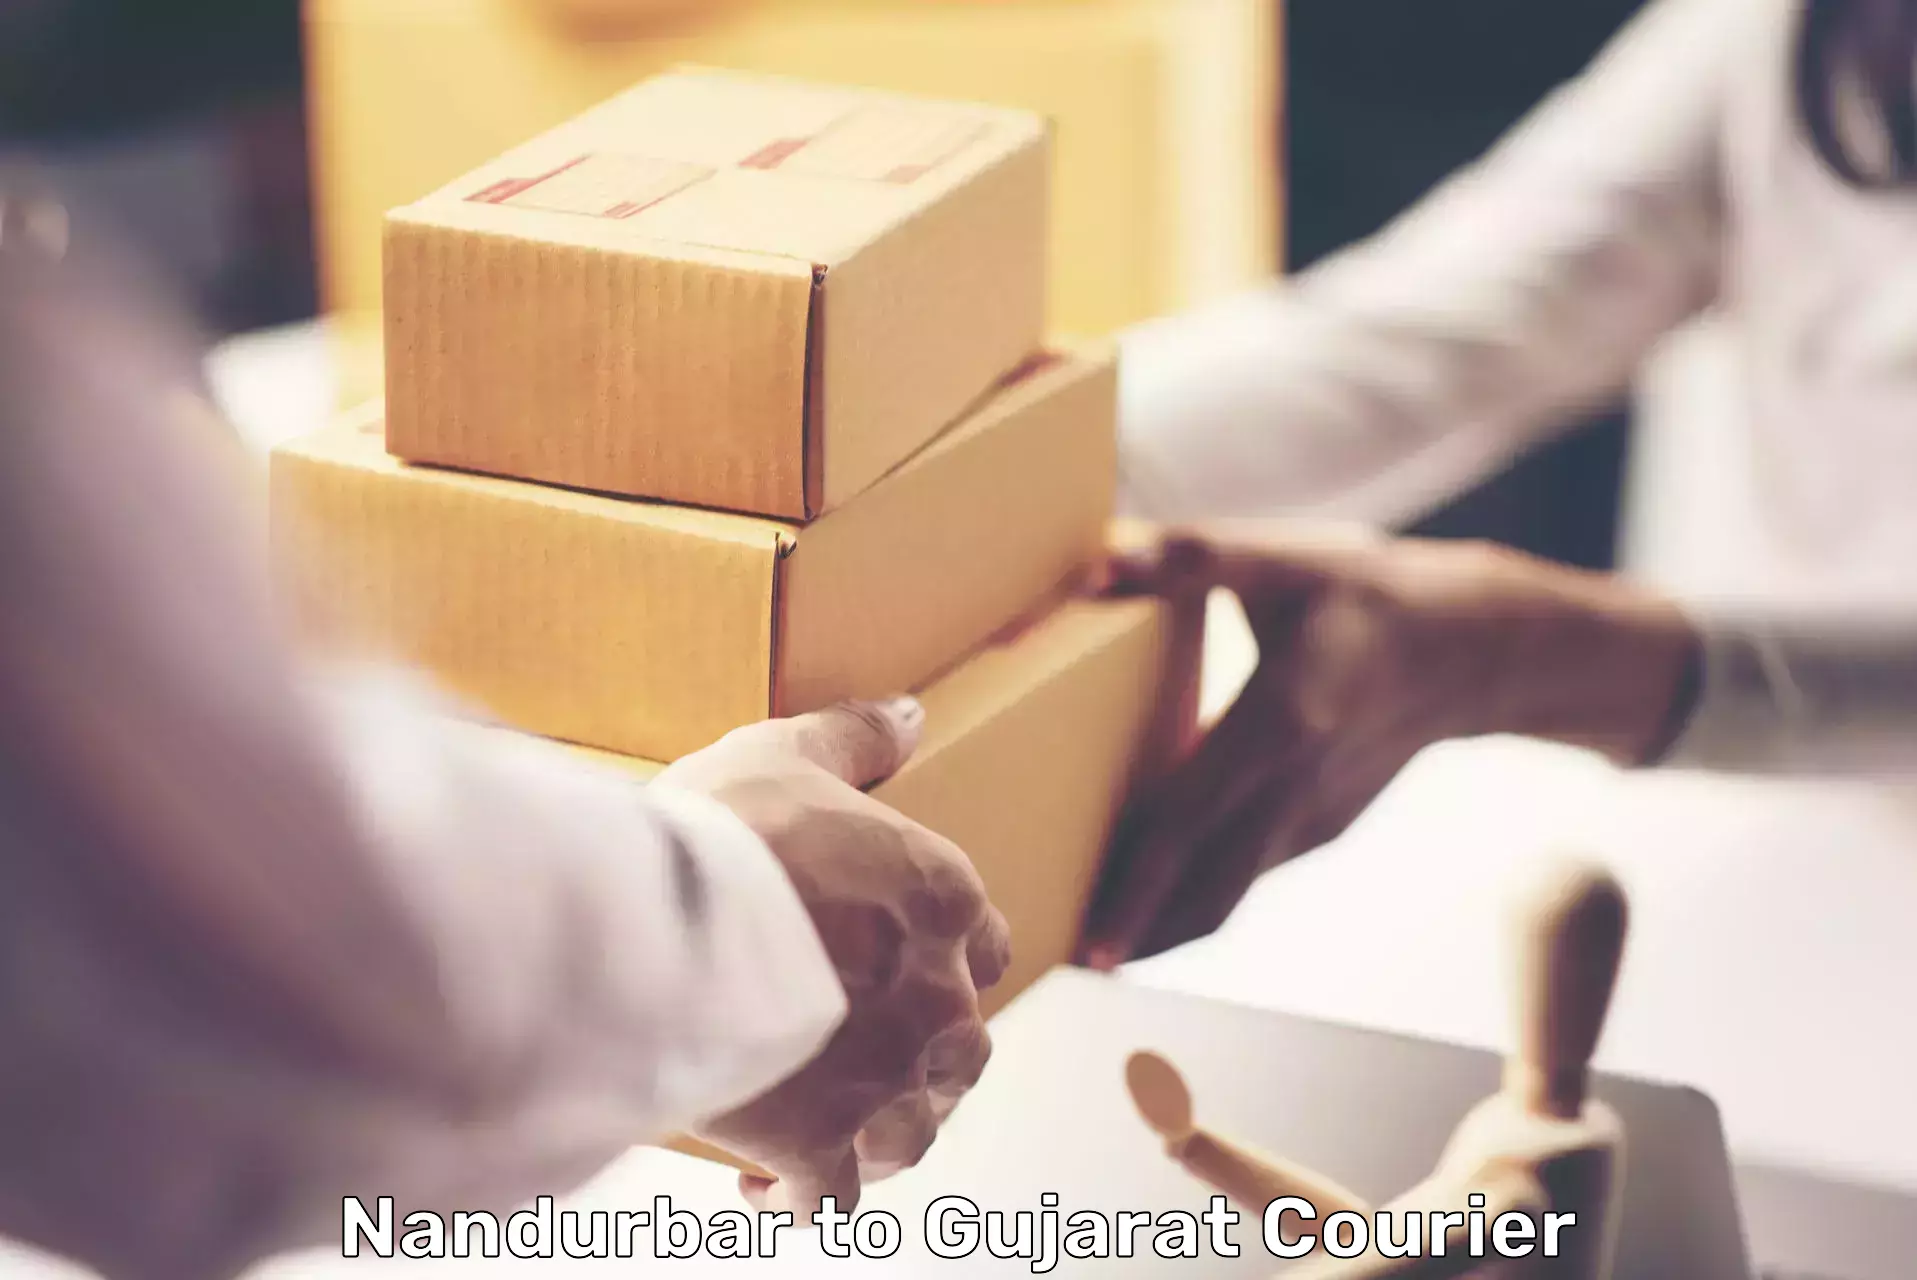 Professional courier handling Nandurbar to Dharmasala